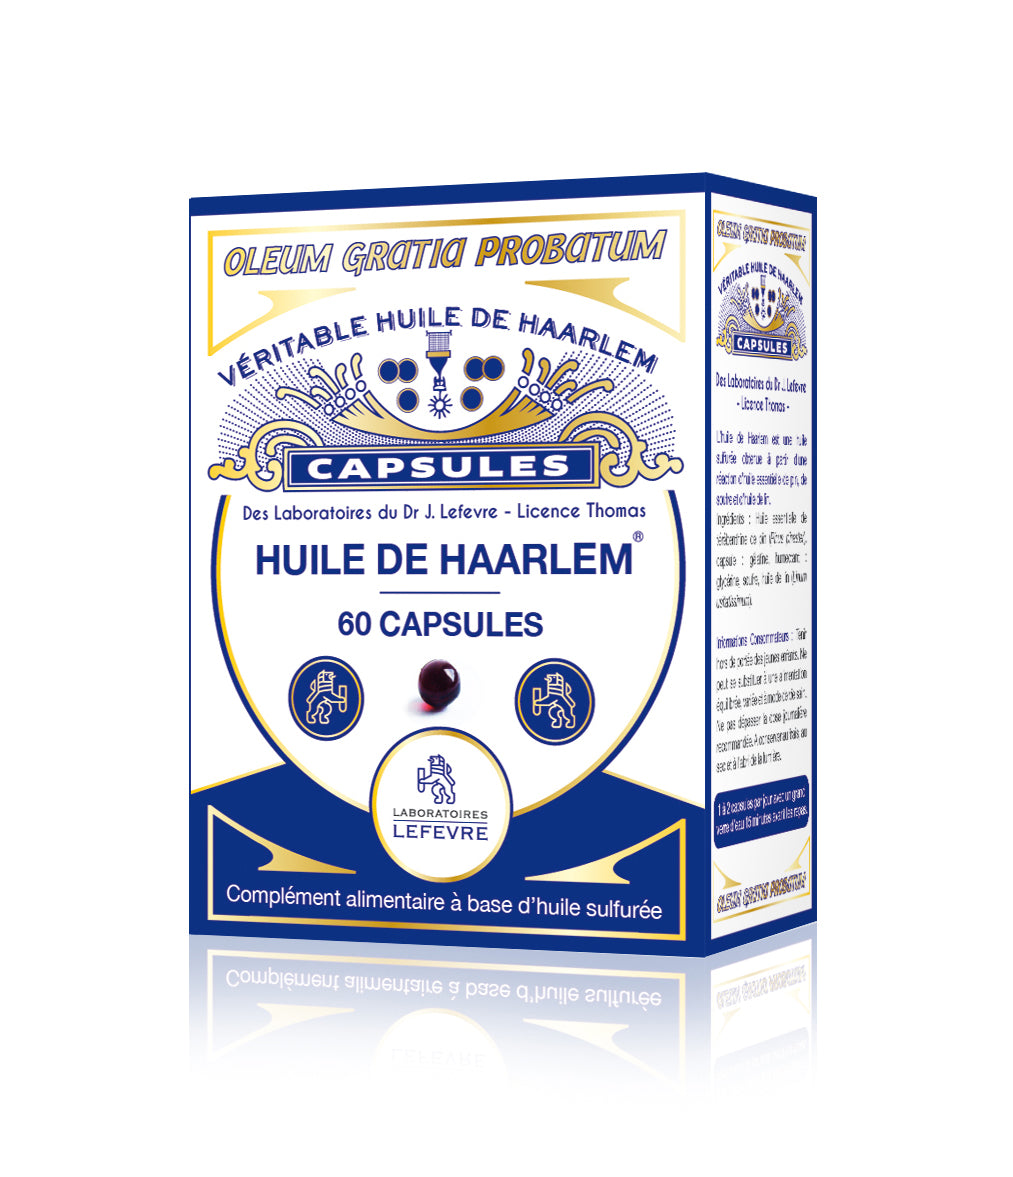 L'huile de Haarlem